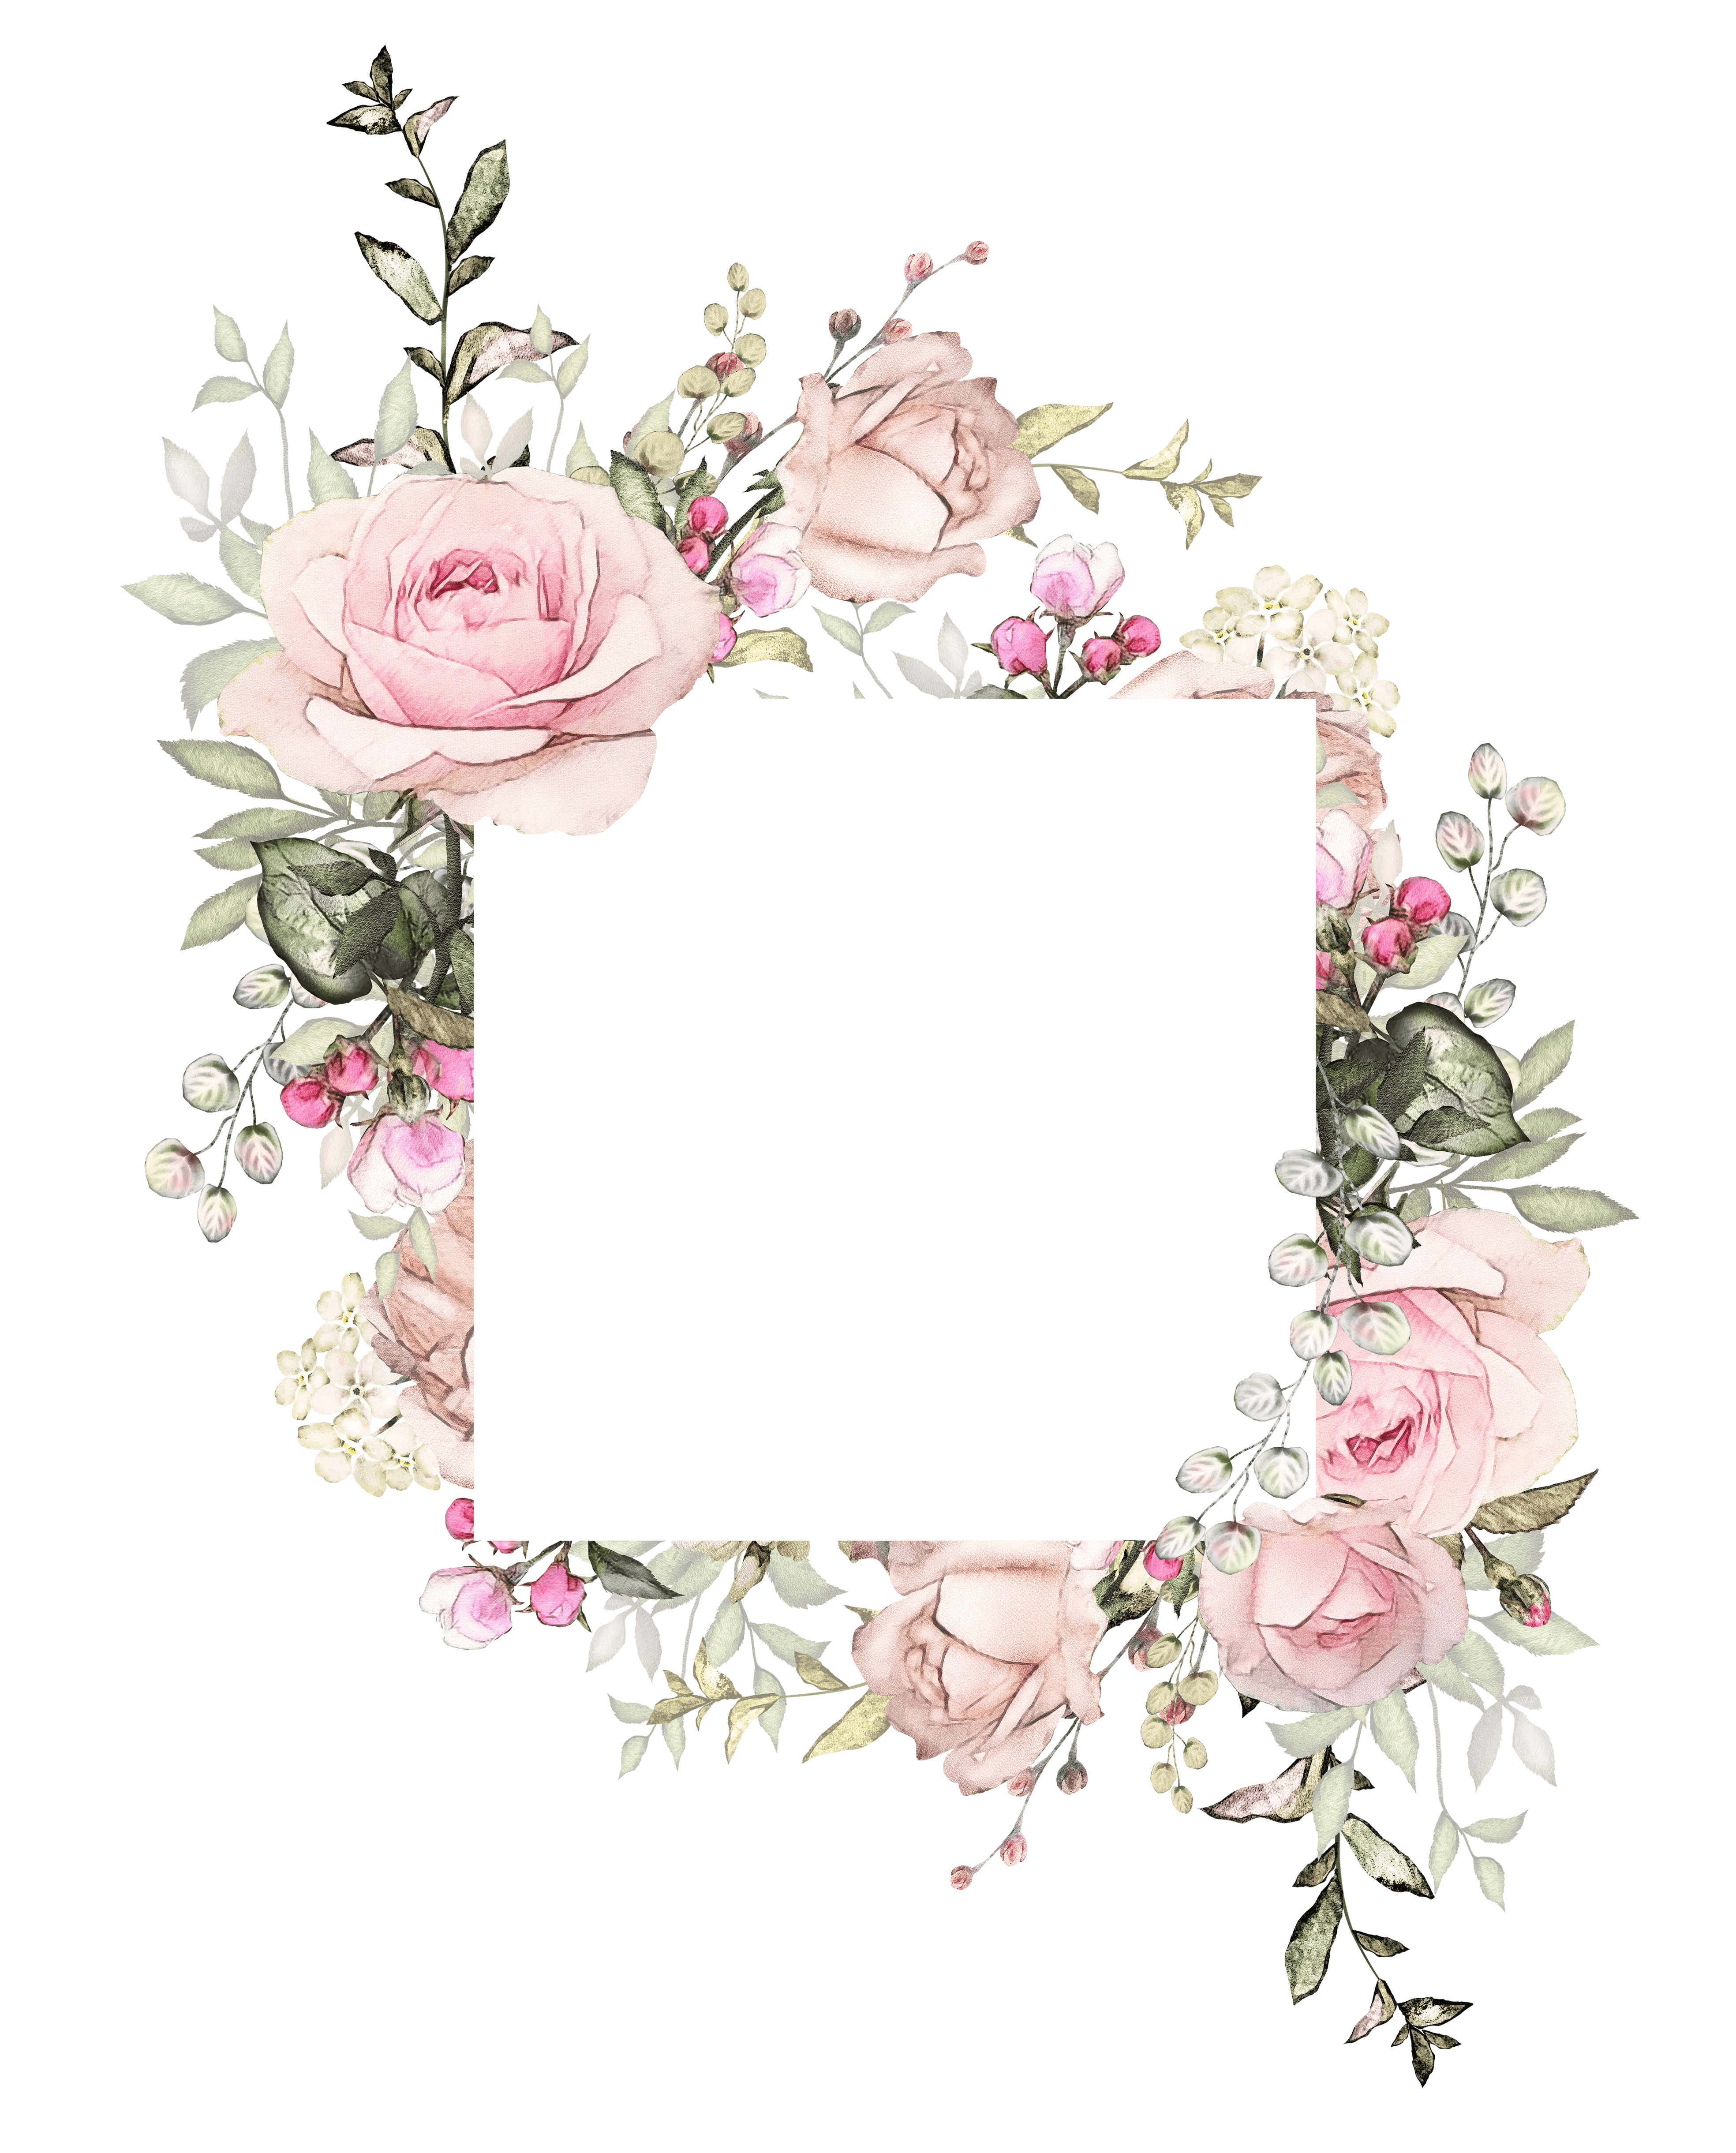 Pink Flower Frame Illustration Wedding Invitation Watercolor Painting Floral Design,Simple Punjabi Suit Design With Laces